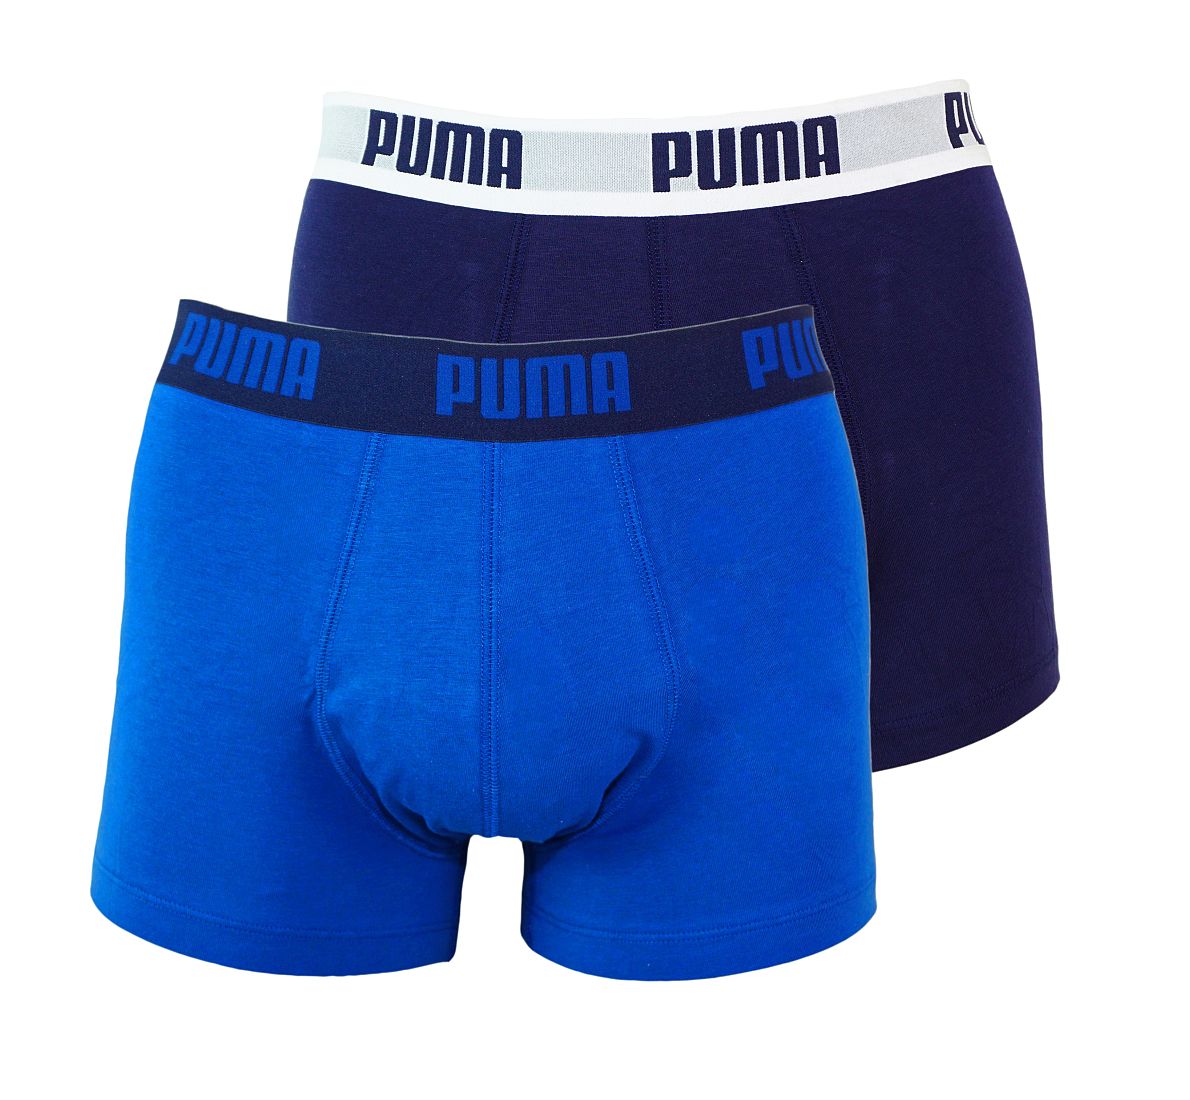 PUMA Shorts Unterhosen 2er Pack Trunk 521025001 420 020 true blue SF17-PMS1